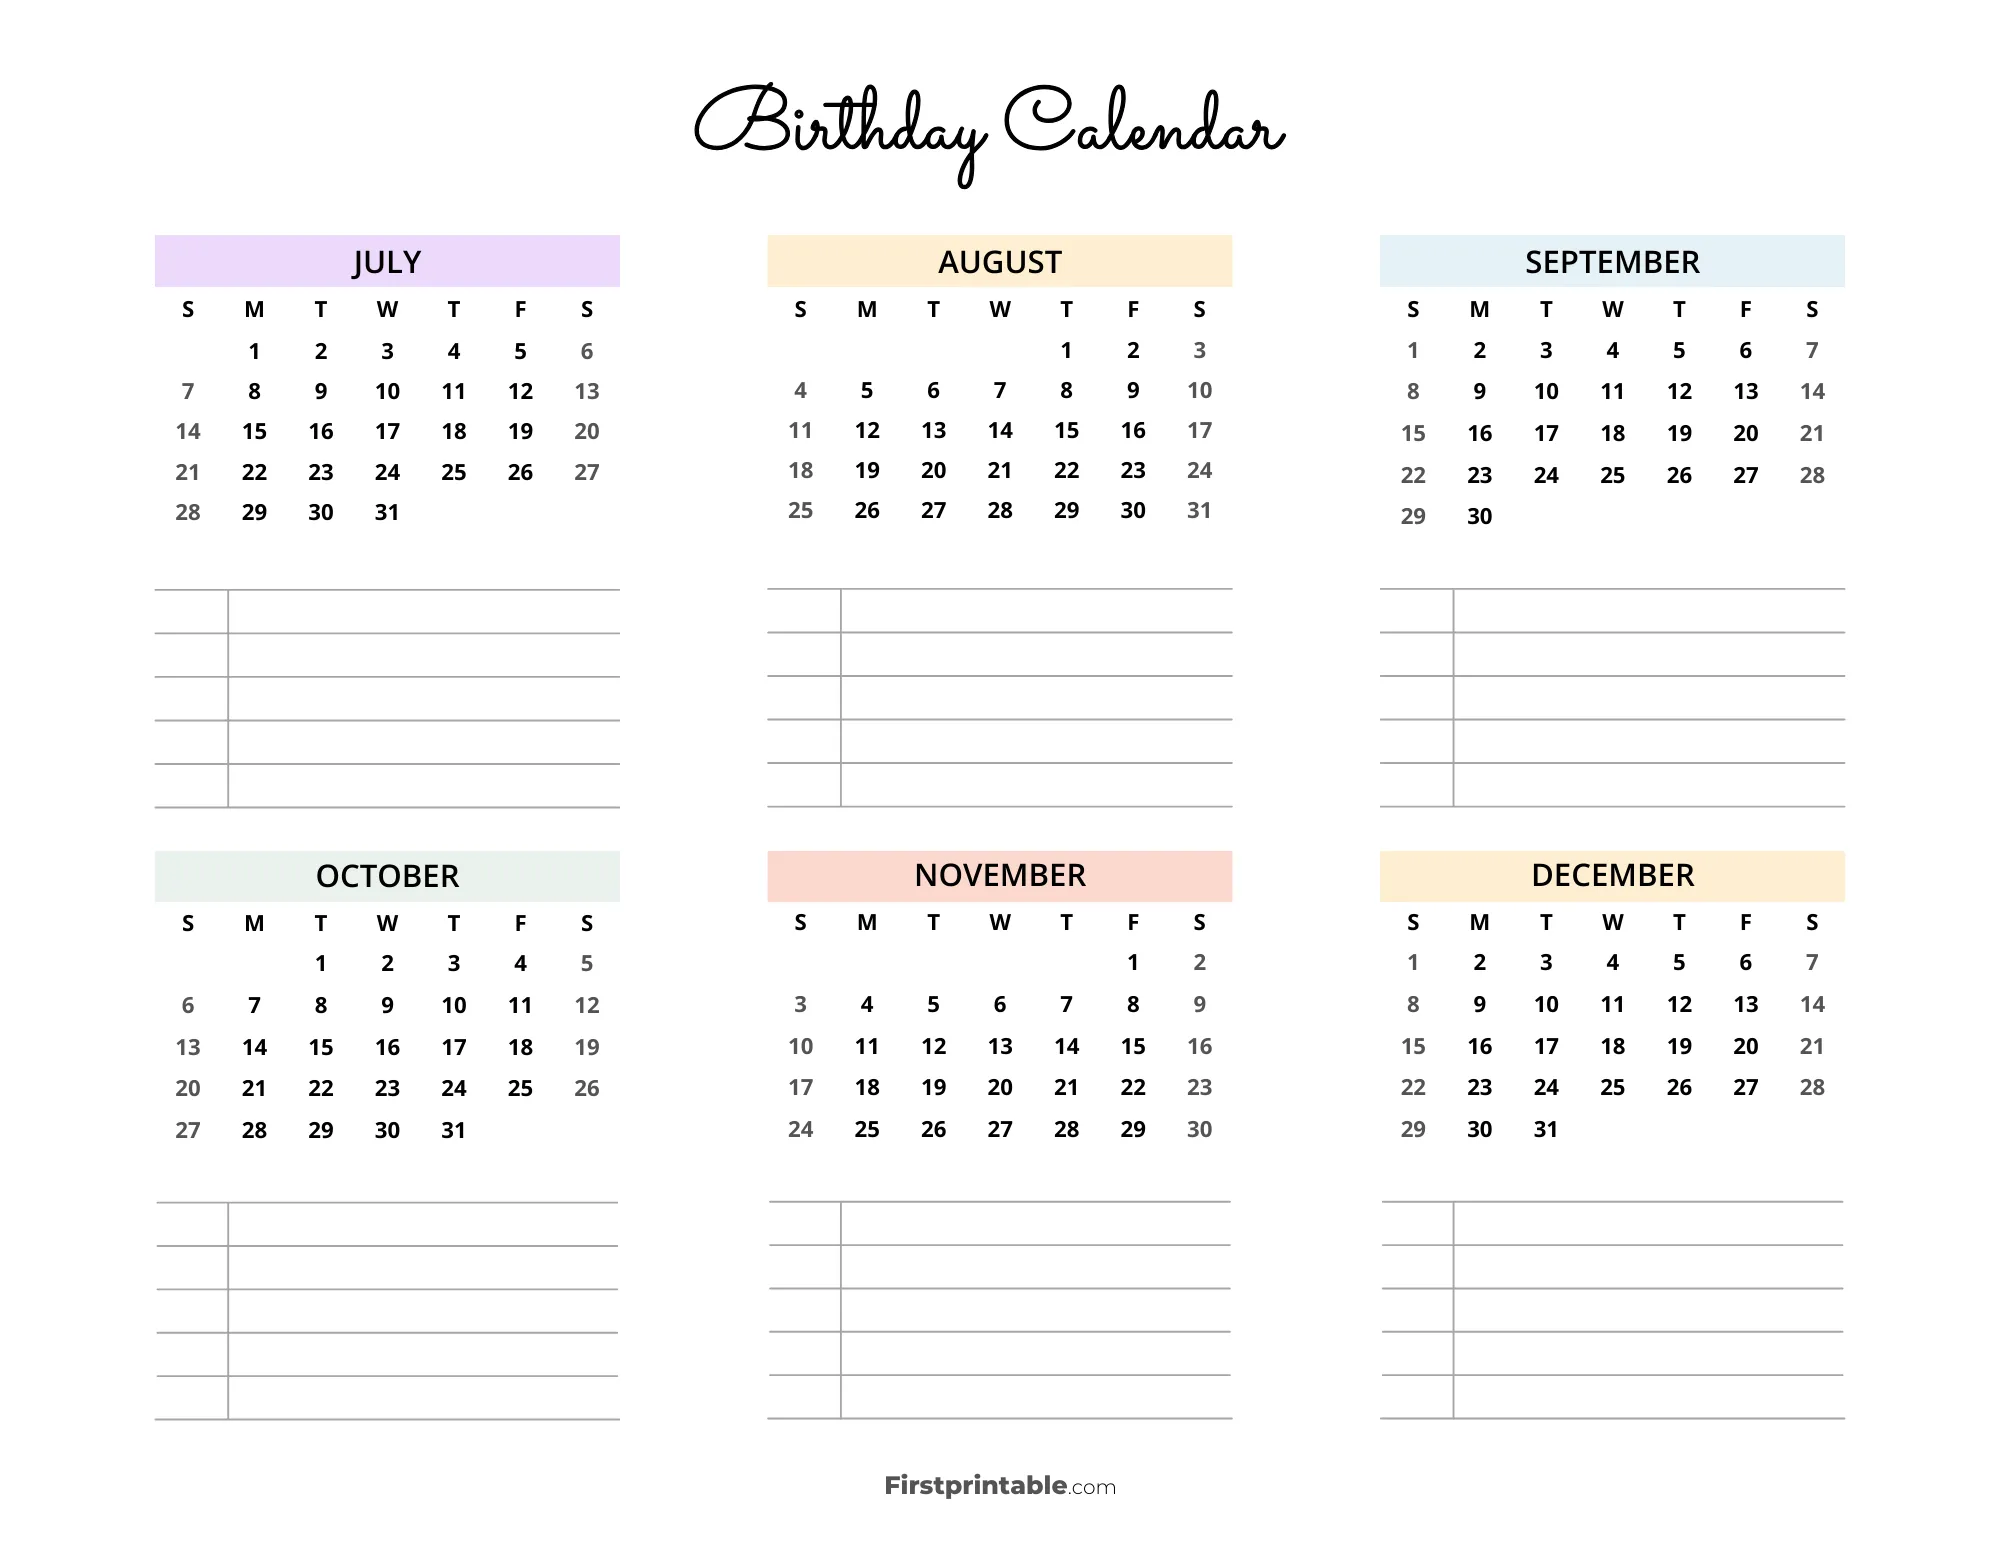 Birthday Calendar Printable Template 22 (2)